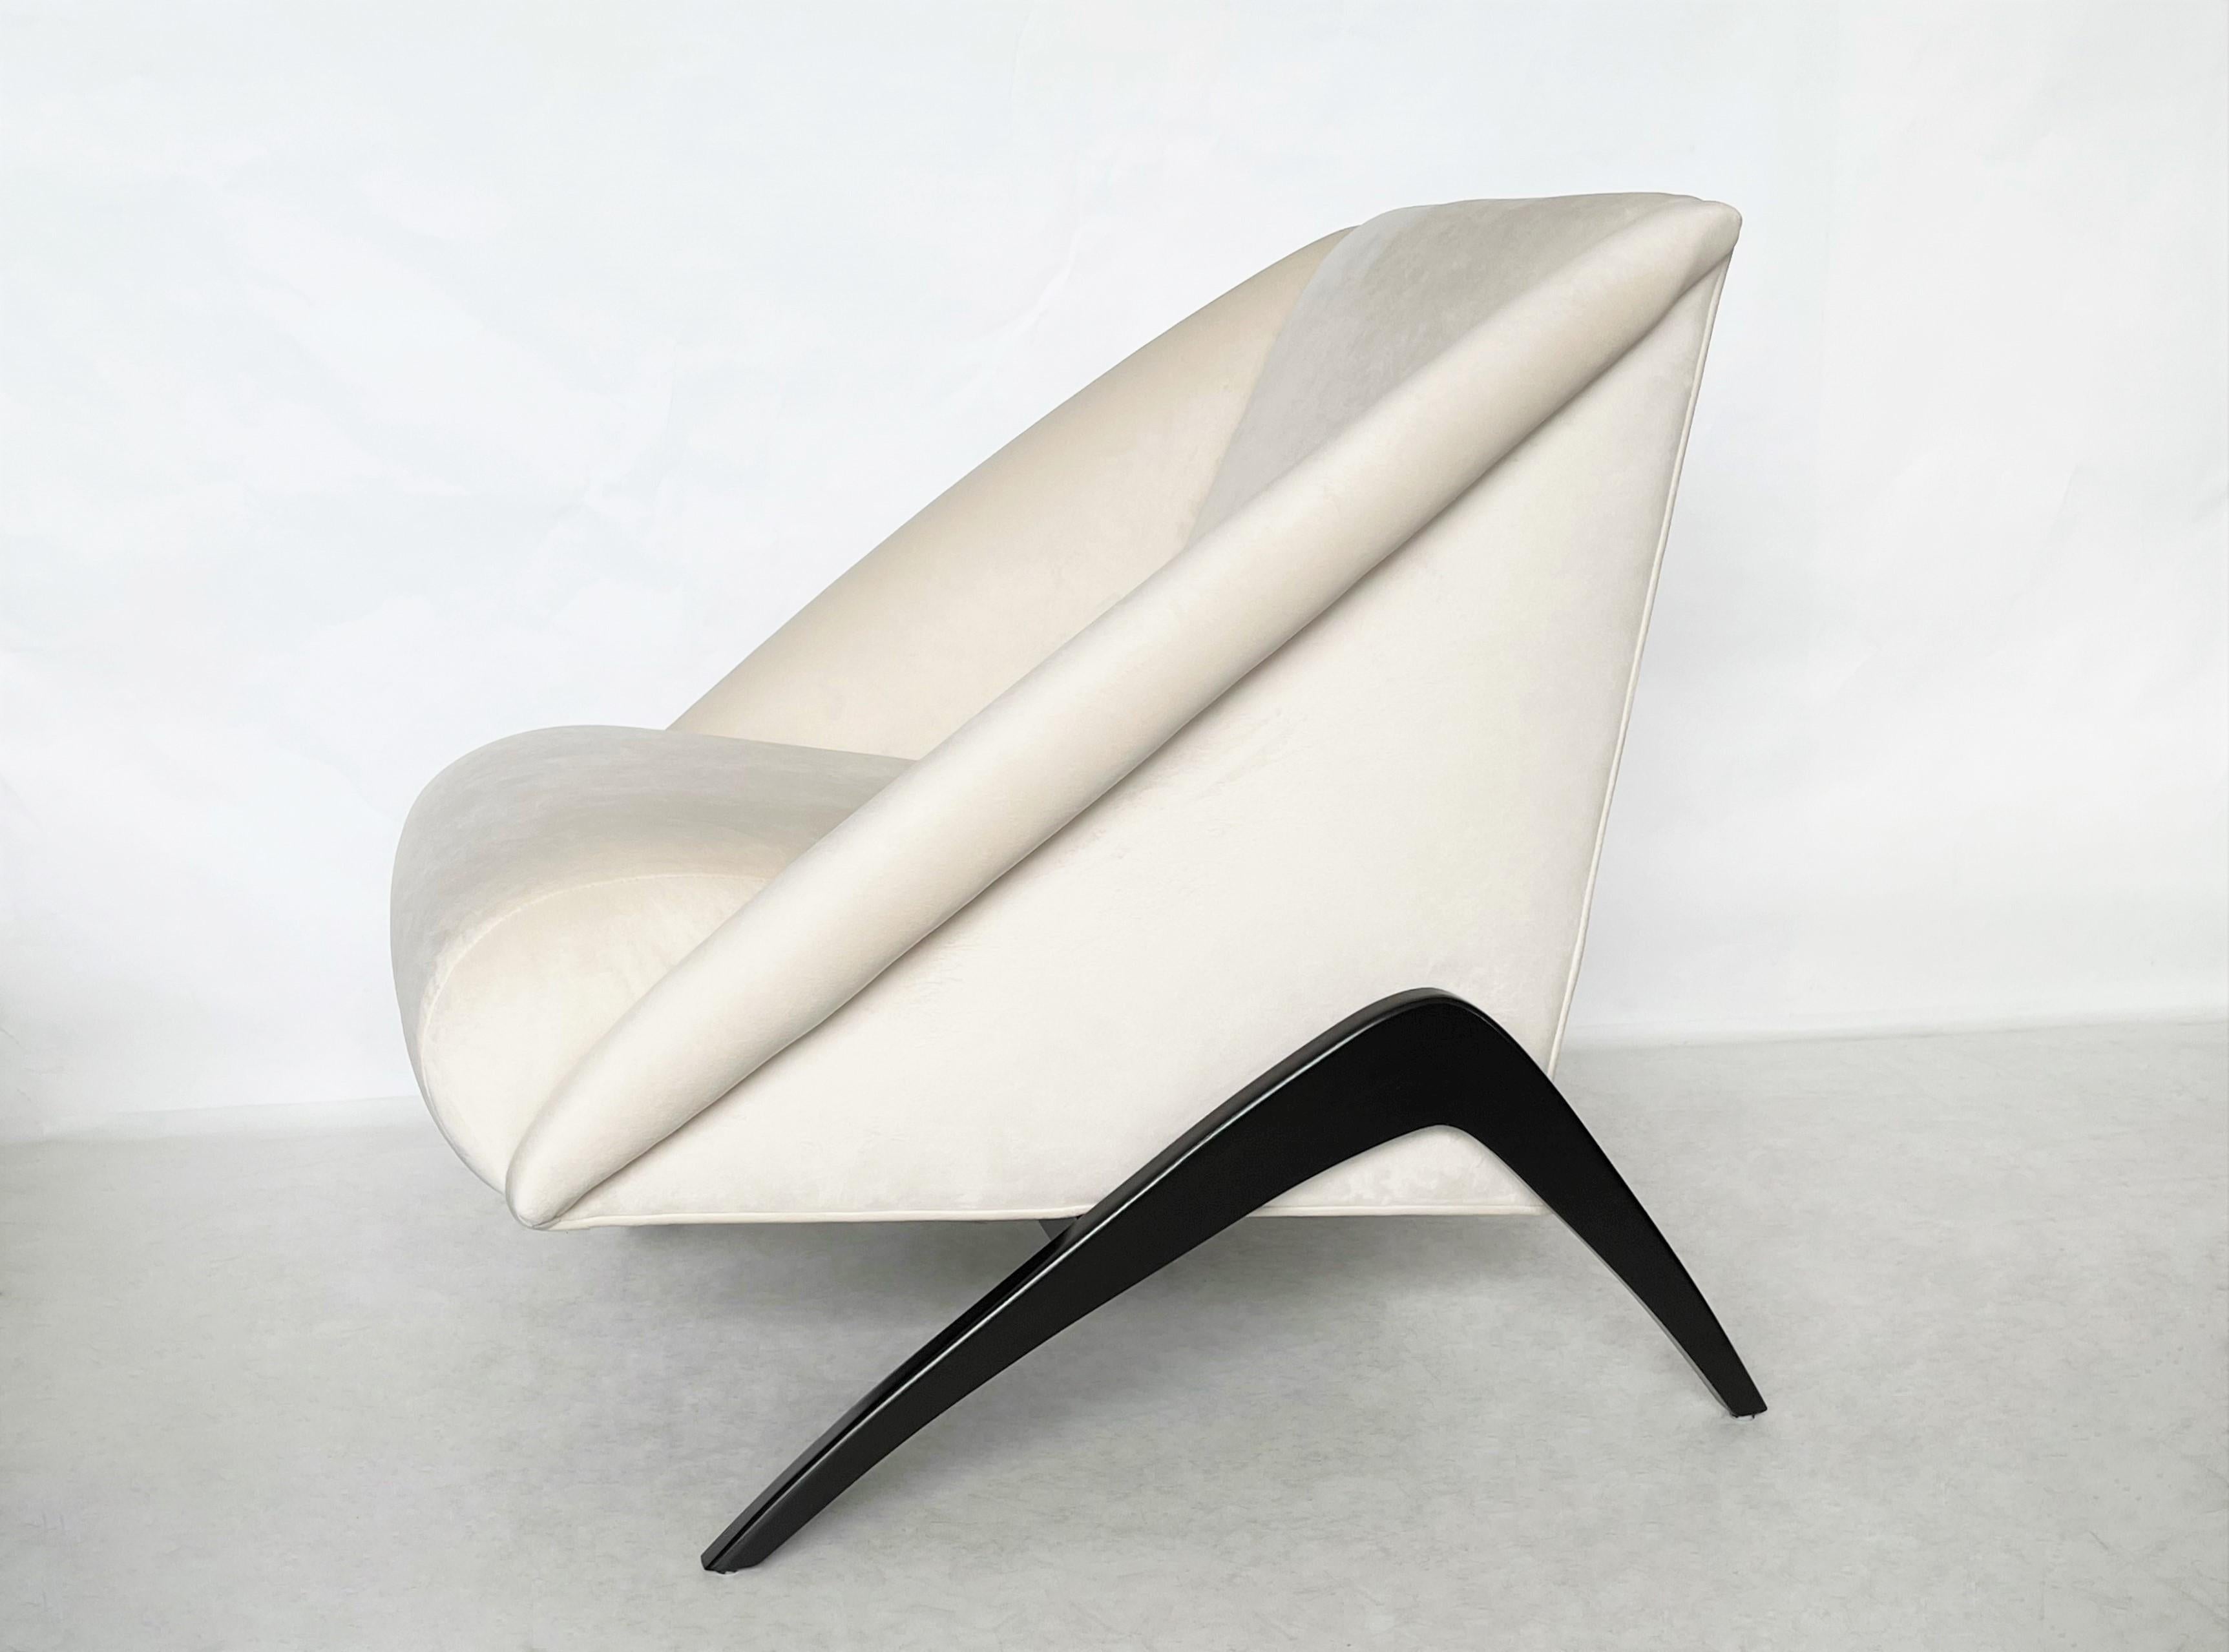 20th Century Pair of Geometric Italian Club or Lounge Chairs Attributed to Gio Ponti